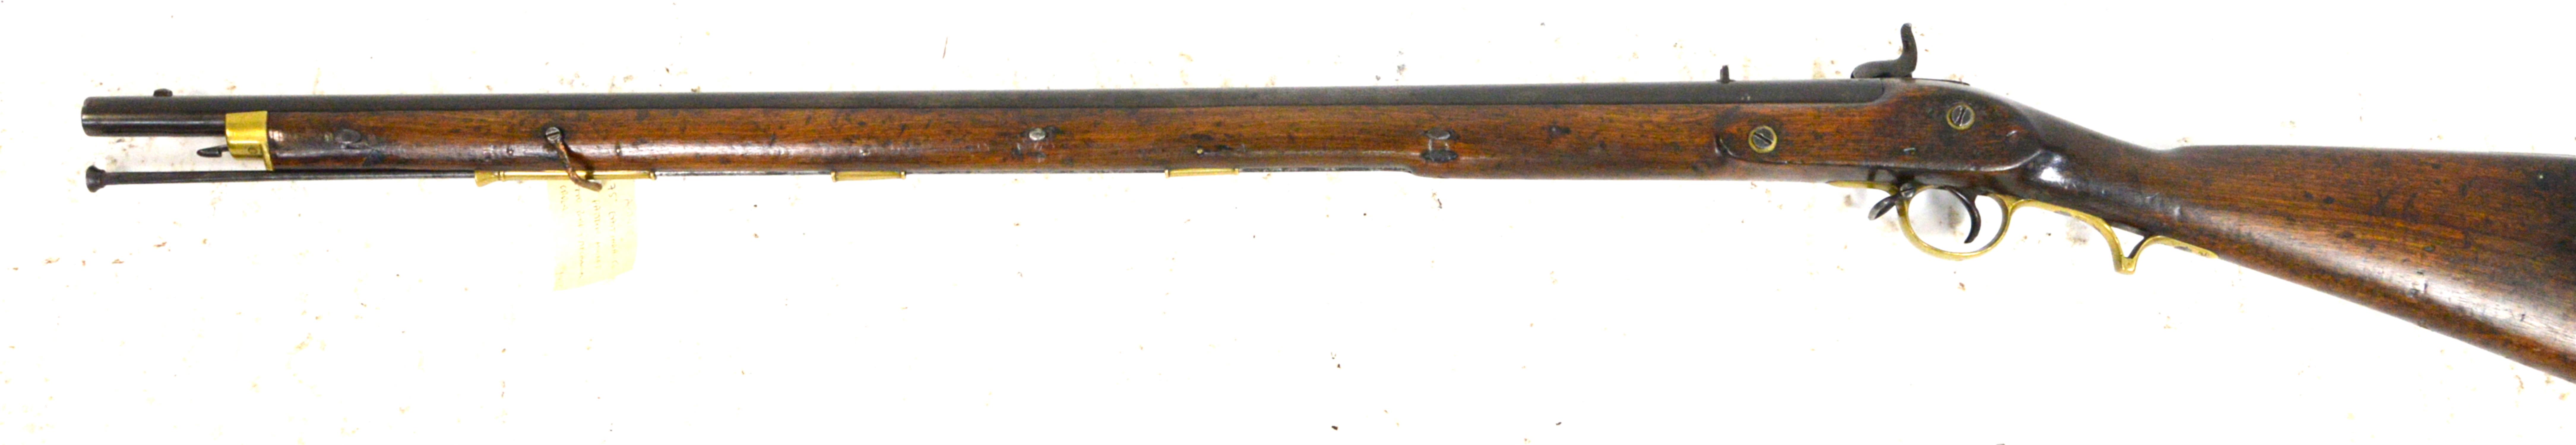 Victorian East India Company percussion cap musket, pattern F, circa 1845-1851, “Brunswick” style